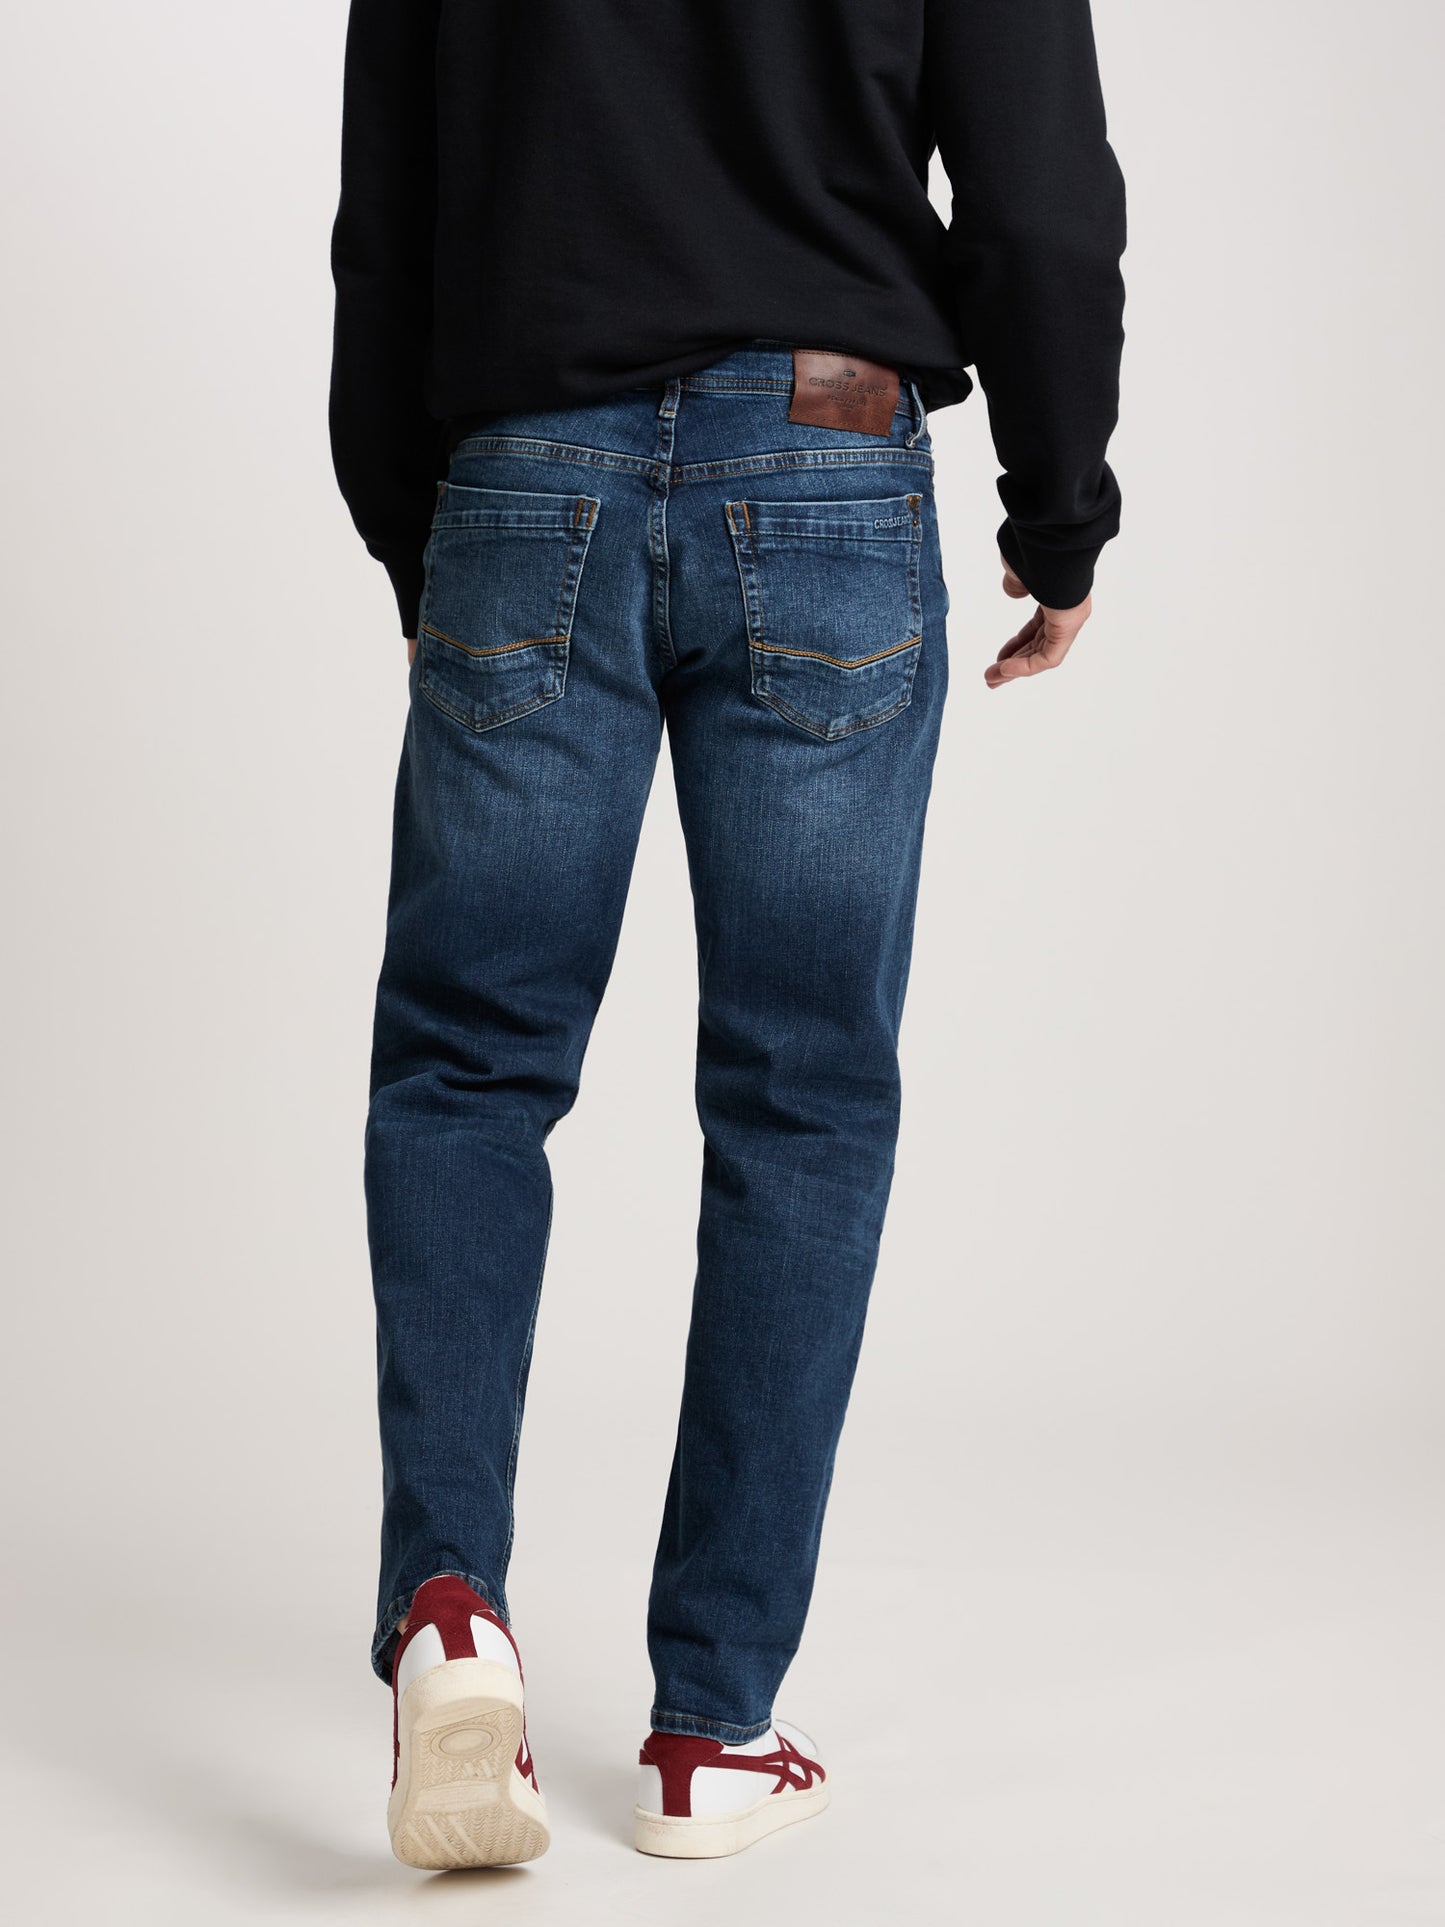 Antonio men's jeans relaxed fit regular waist straight leg dark blue